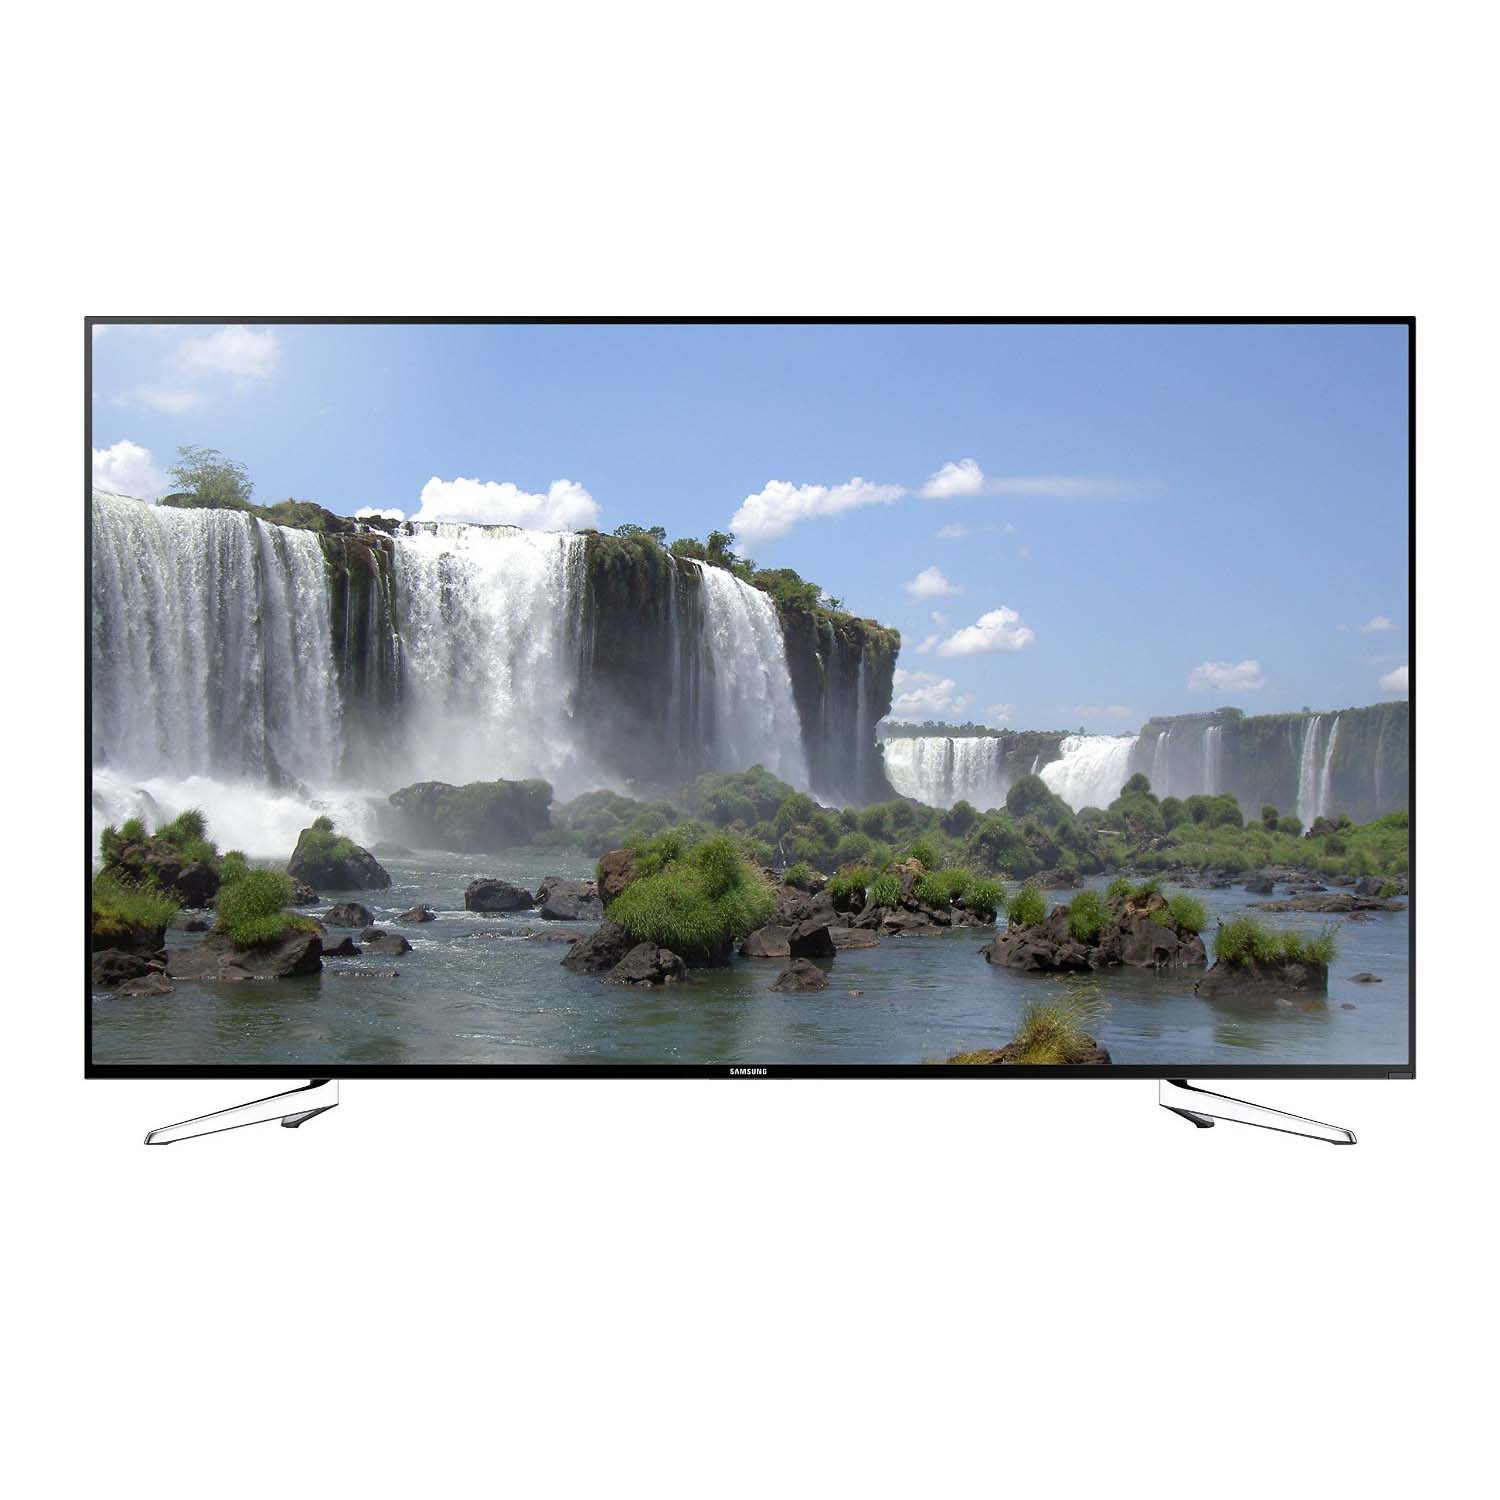 Samsung UN75J6300 75-Inch 1080p Smart LED TV (2015 Model) *관부가세 별도*